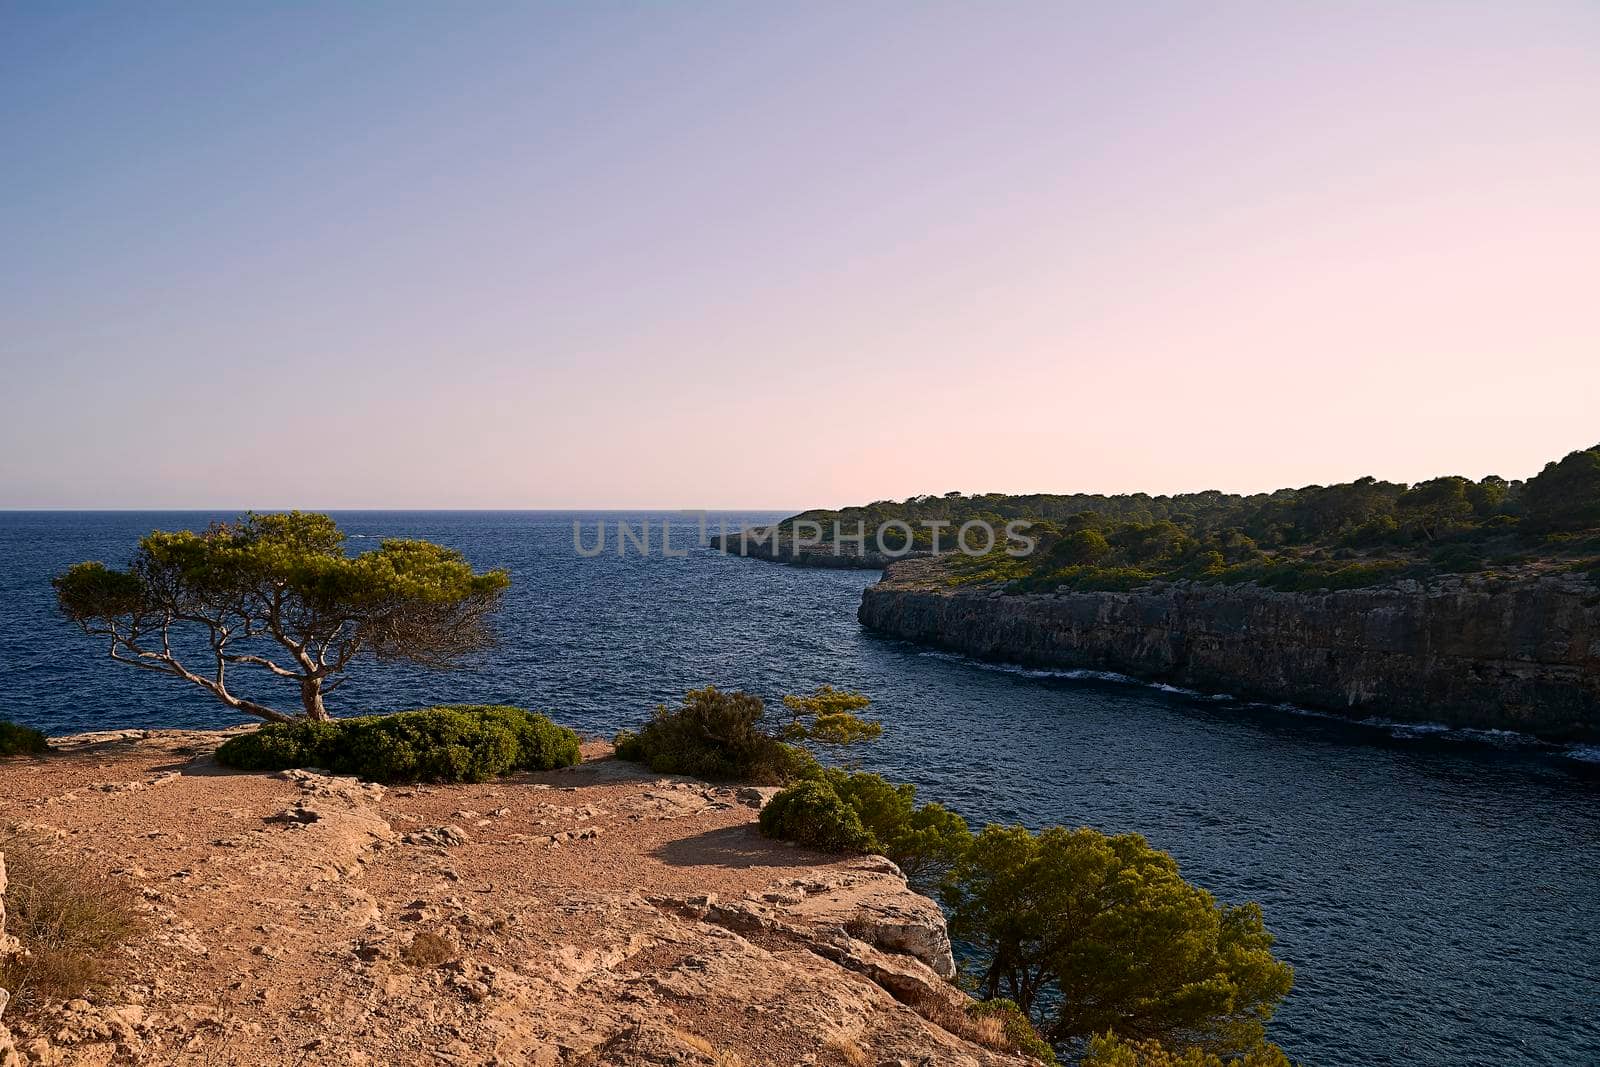 Coastal landscape between cliffs with vegetation. Cloudless sky. Balearic Islands. Mediterranean Sea